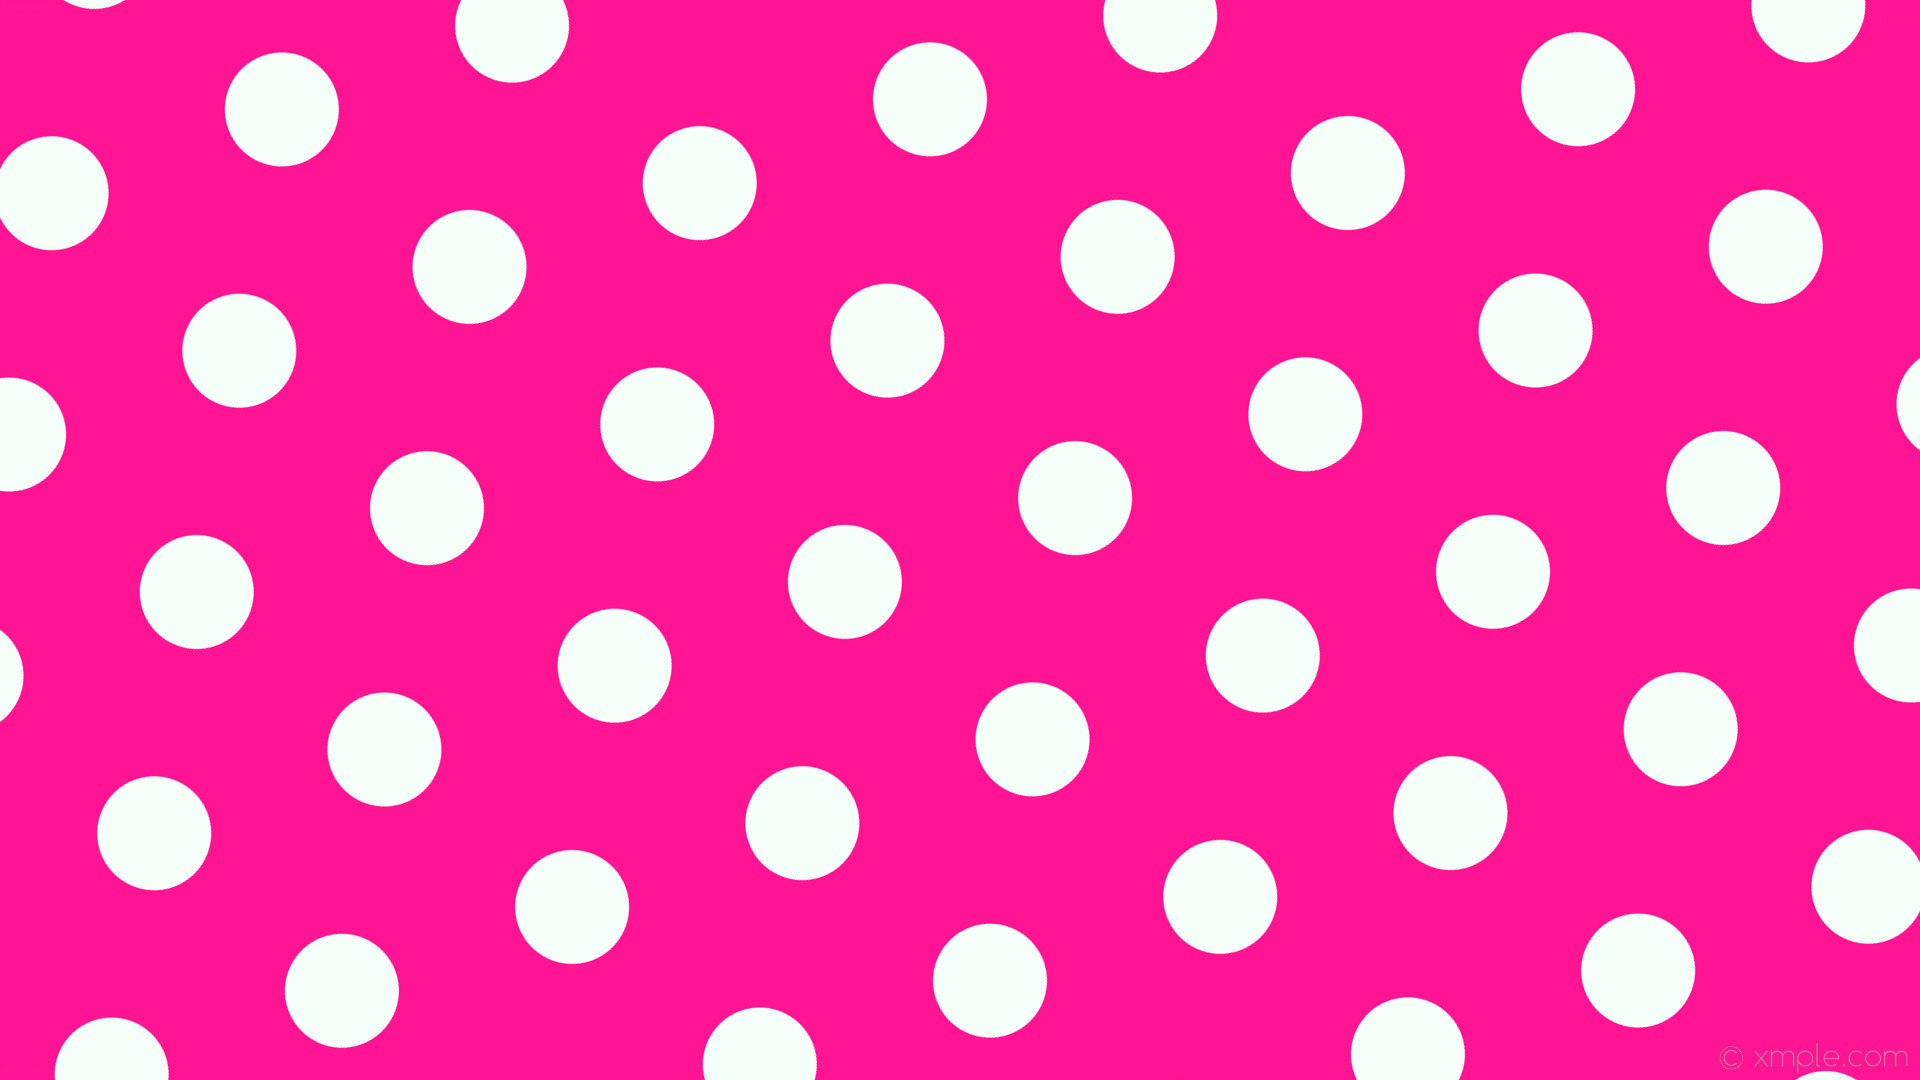 1920x1080 wallpaper hexagon pink polka dots white deep pink mint cream #ff1493  #f5fffa diagonal 20